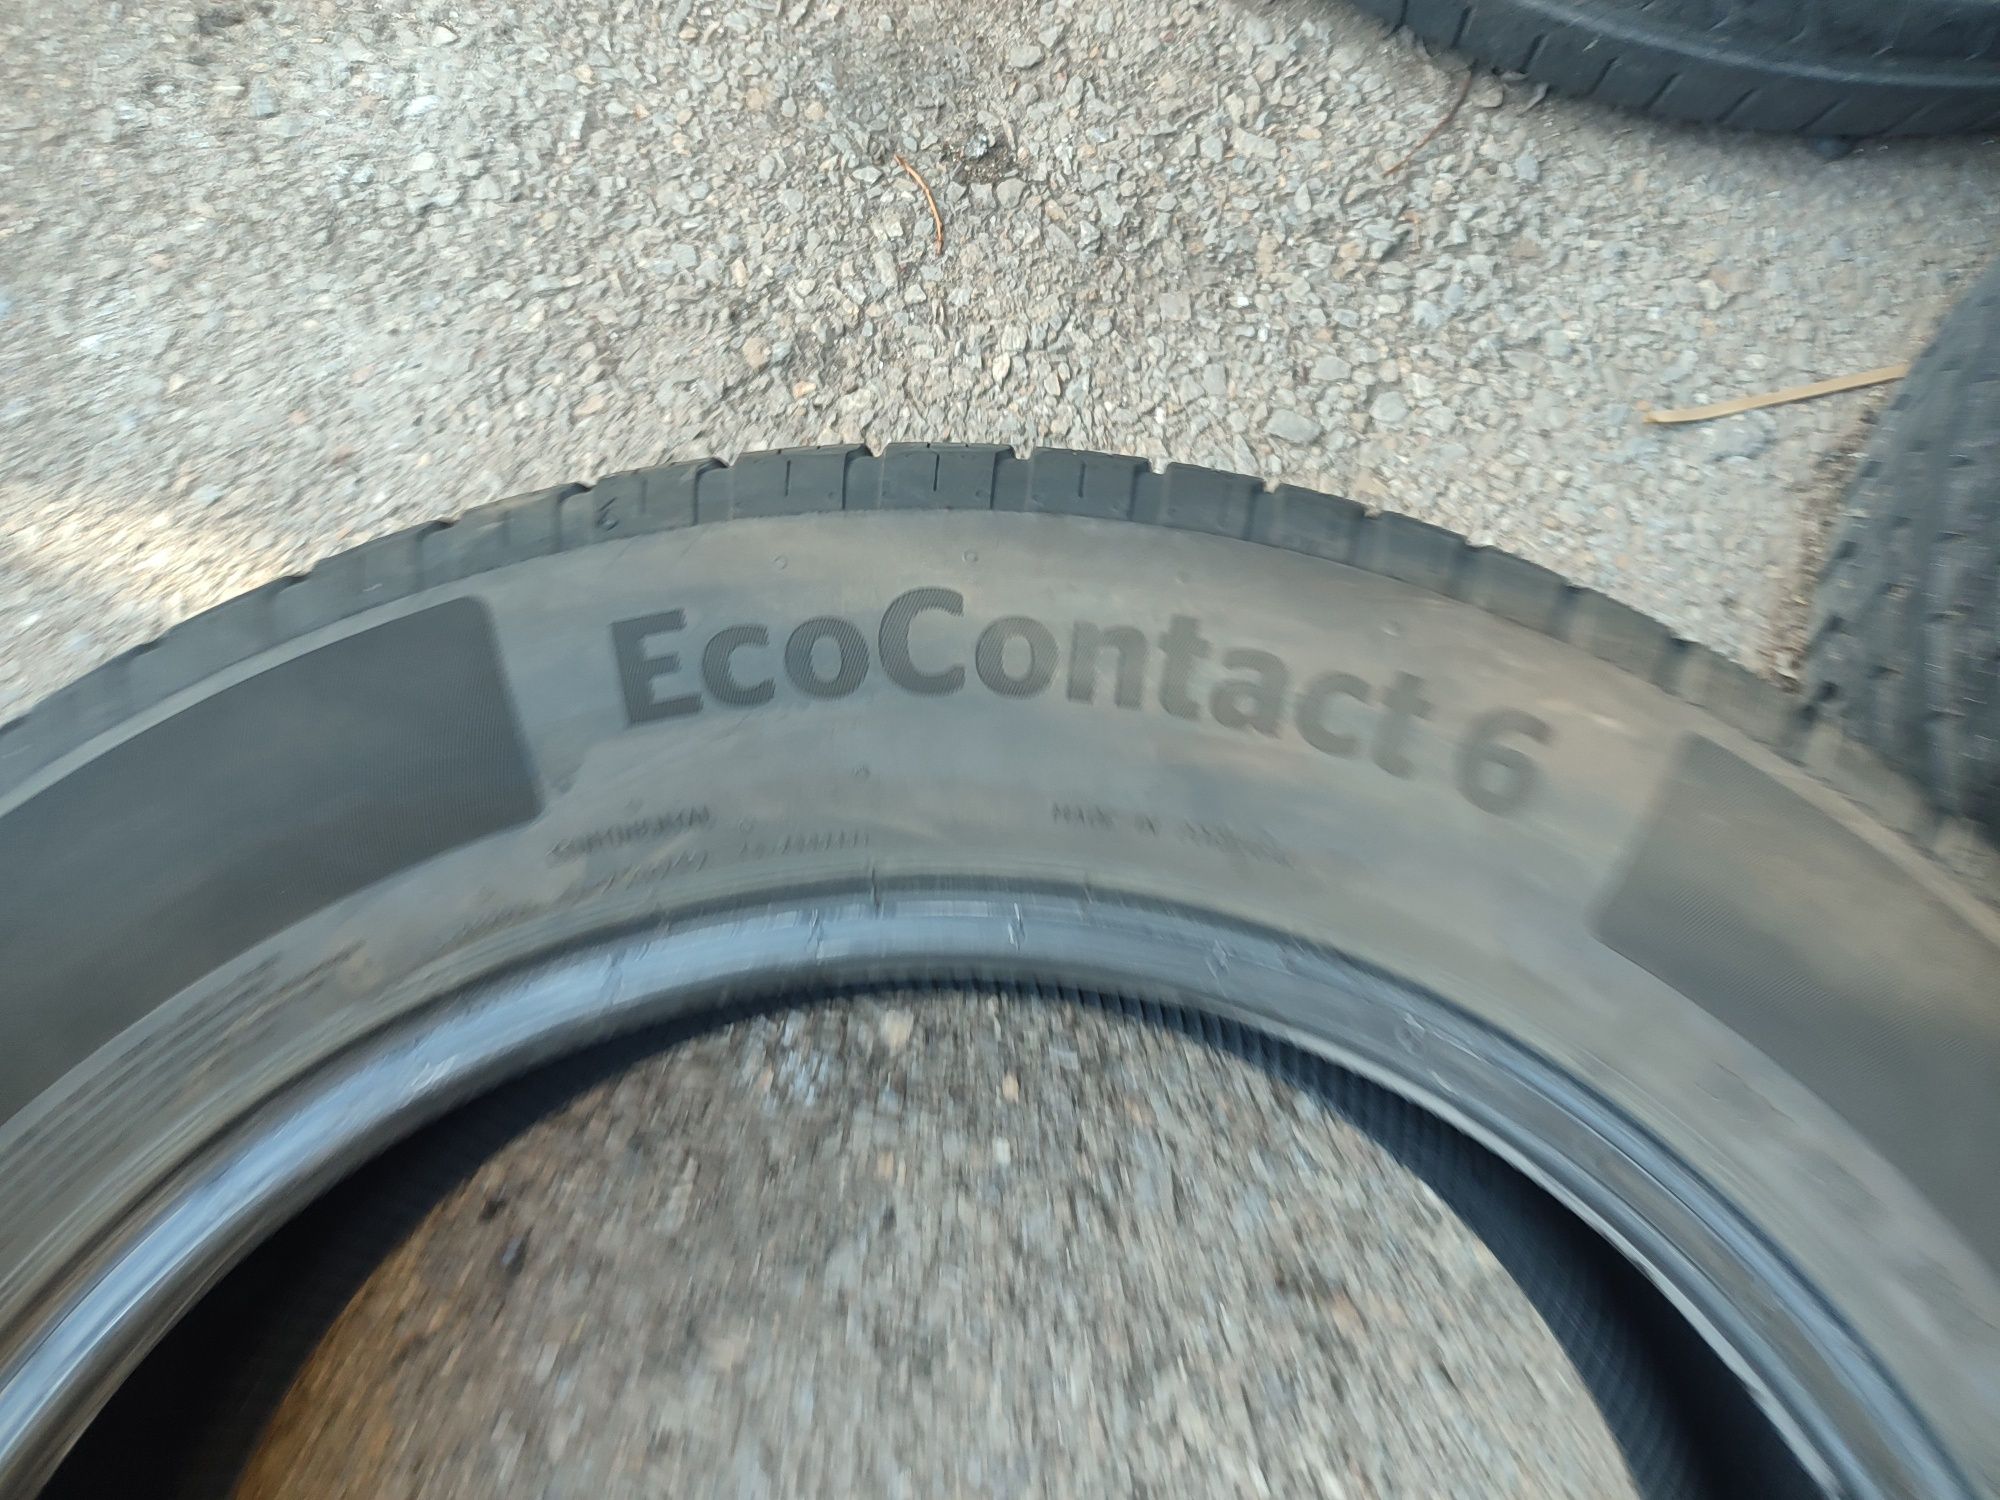 235/55/18" 4бр Continental eco contact 6,dot3122,6mm